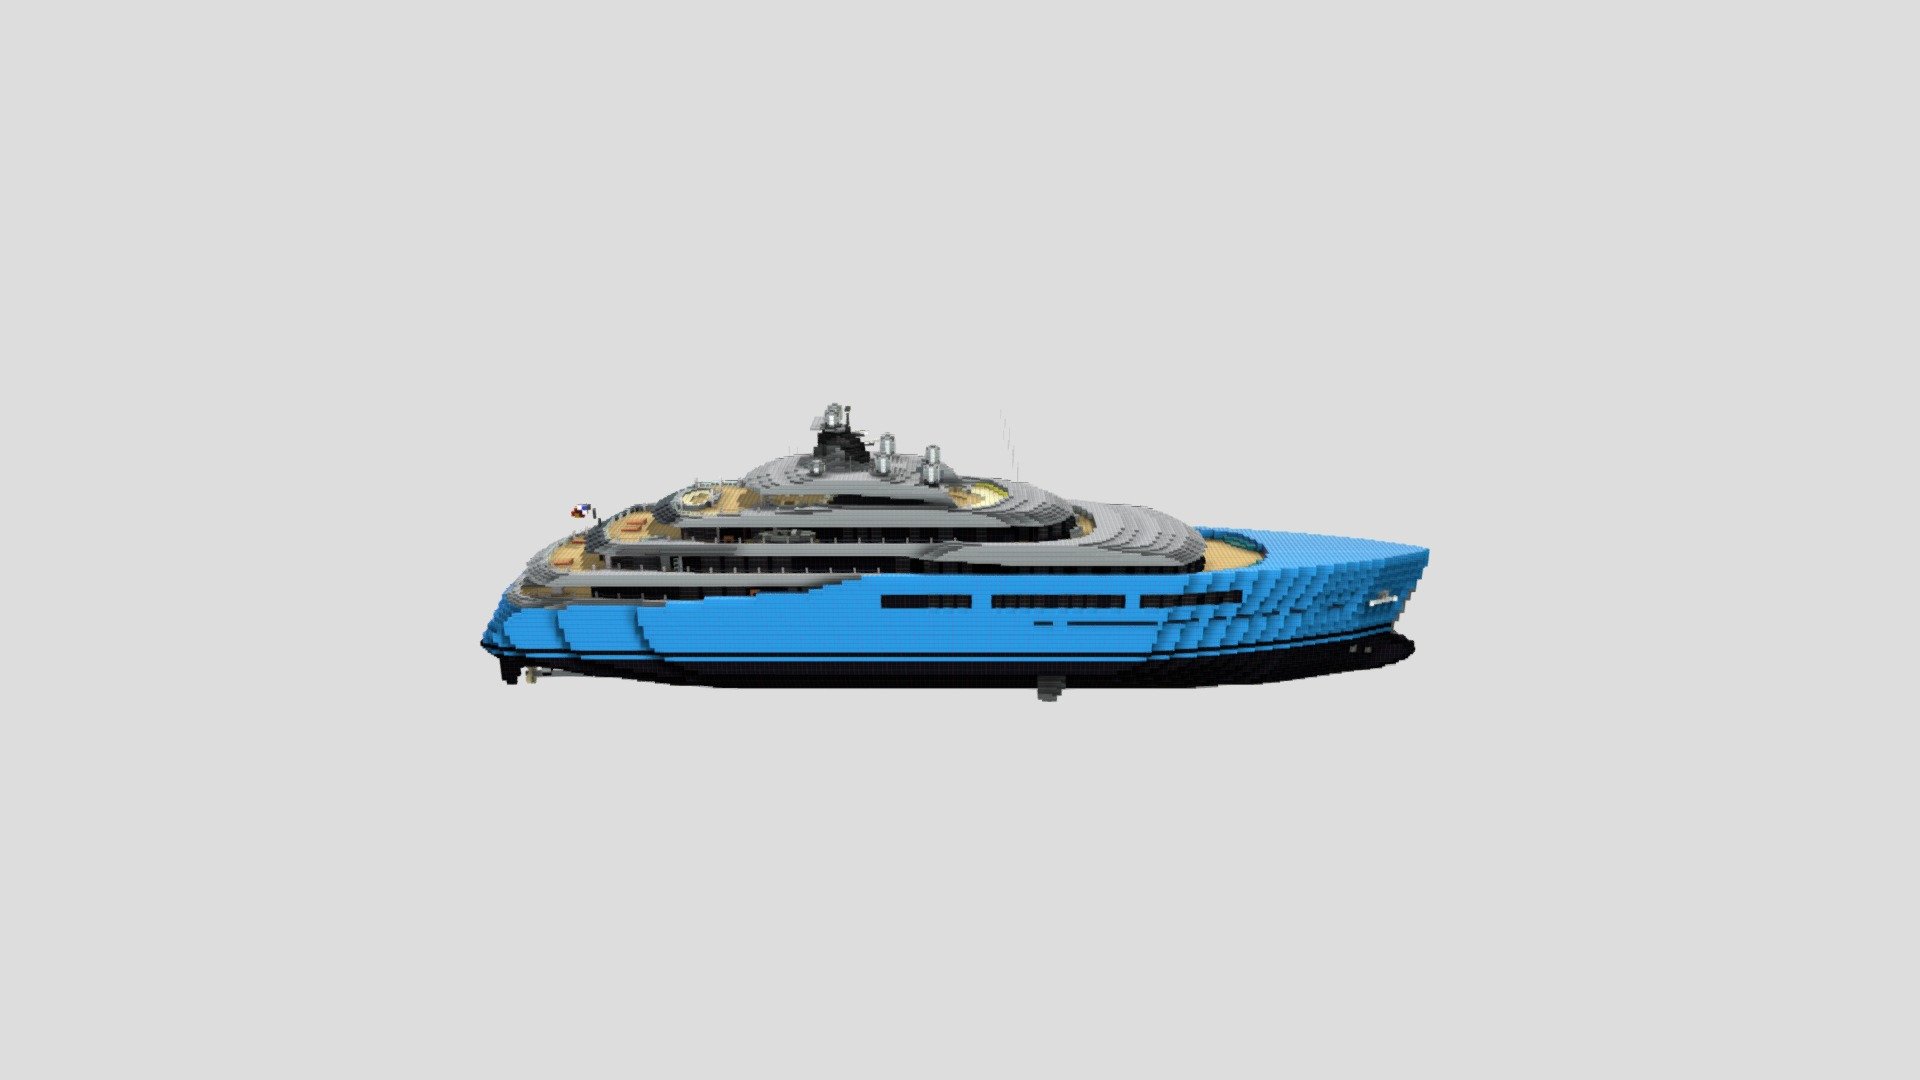 Twitter | https://twitter.com/Refreshinq_

PMC | https://www.planetminecraft.com/project/yacht-aviva-2-1-scale/ - Yacht Aviva - 2:1 Scale - 3D model by Refreshinq 3d model